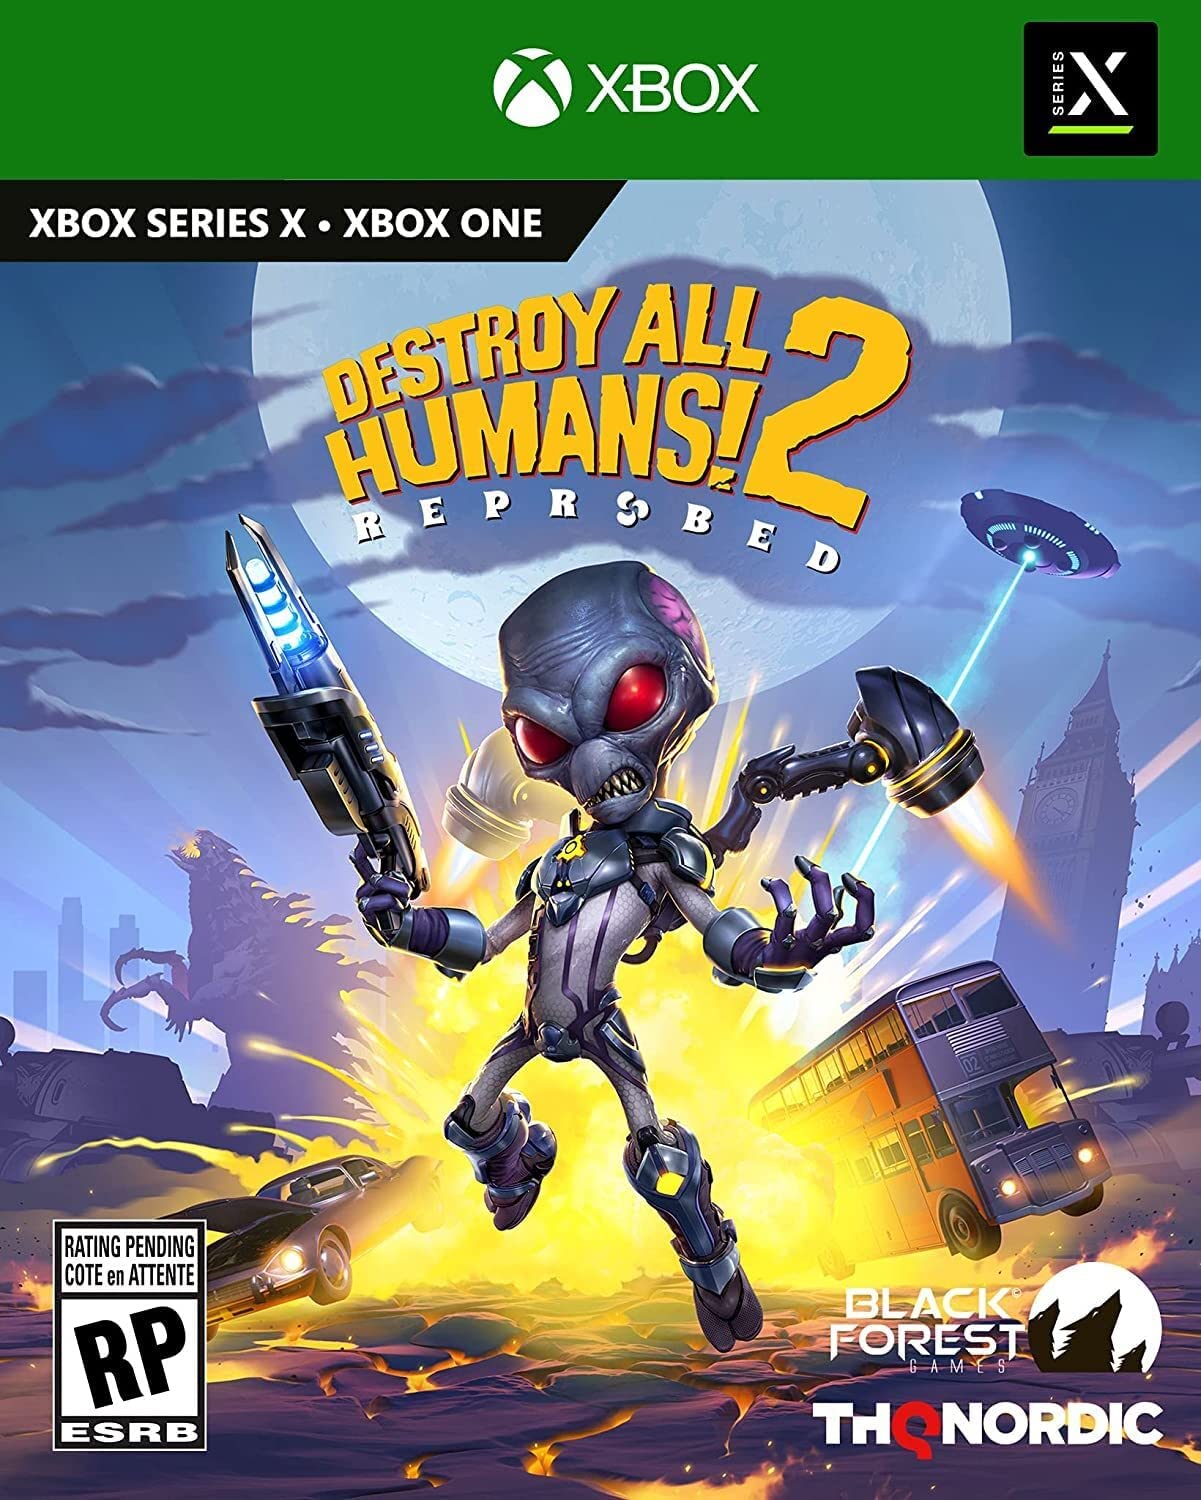 Destroy All Humans 2 Xbox